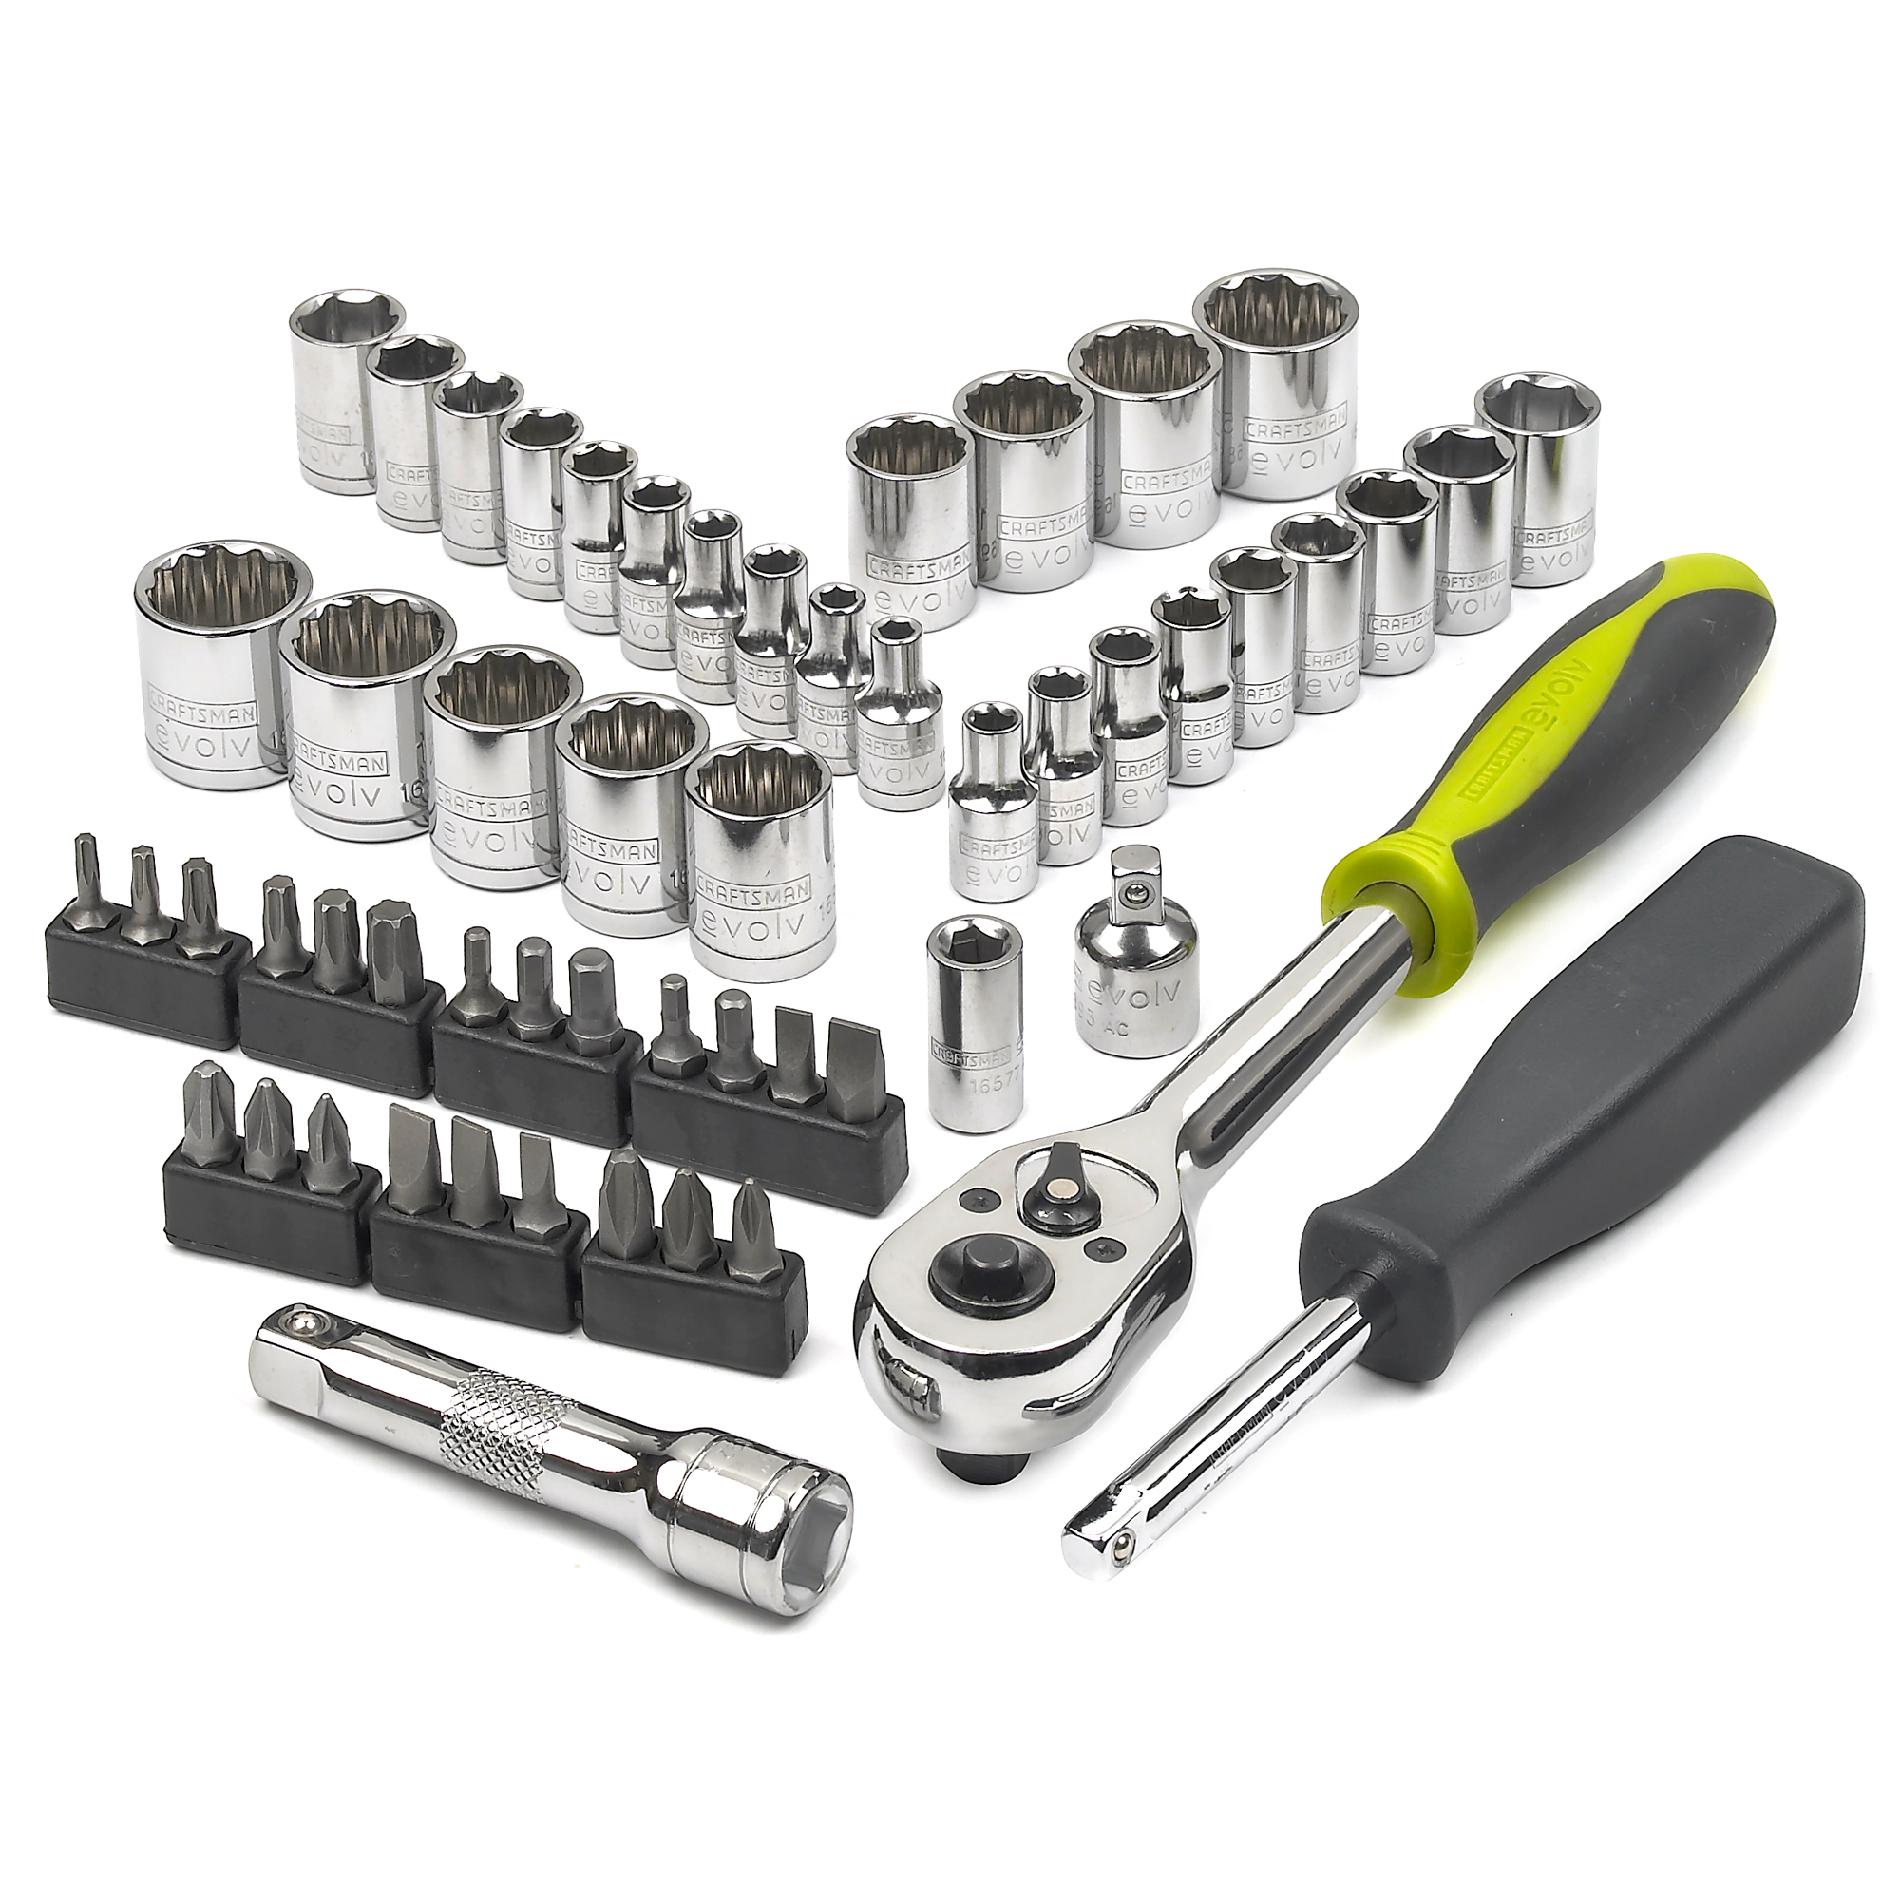 Craftsman Evolv 55 pc. Mechanics Tool Set